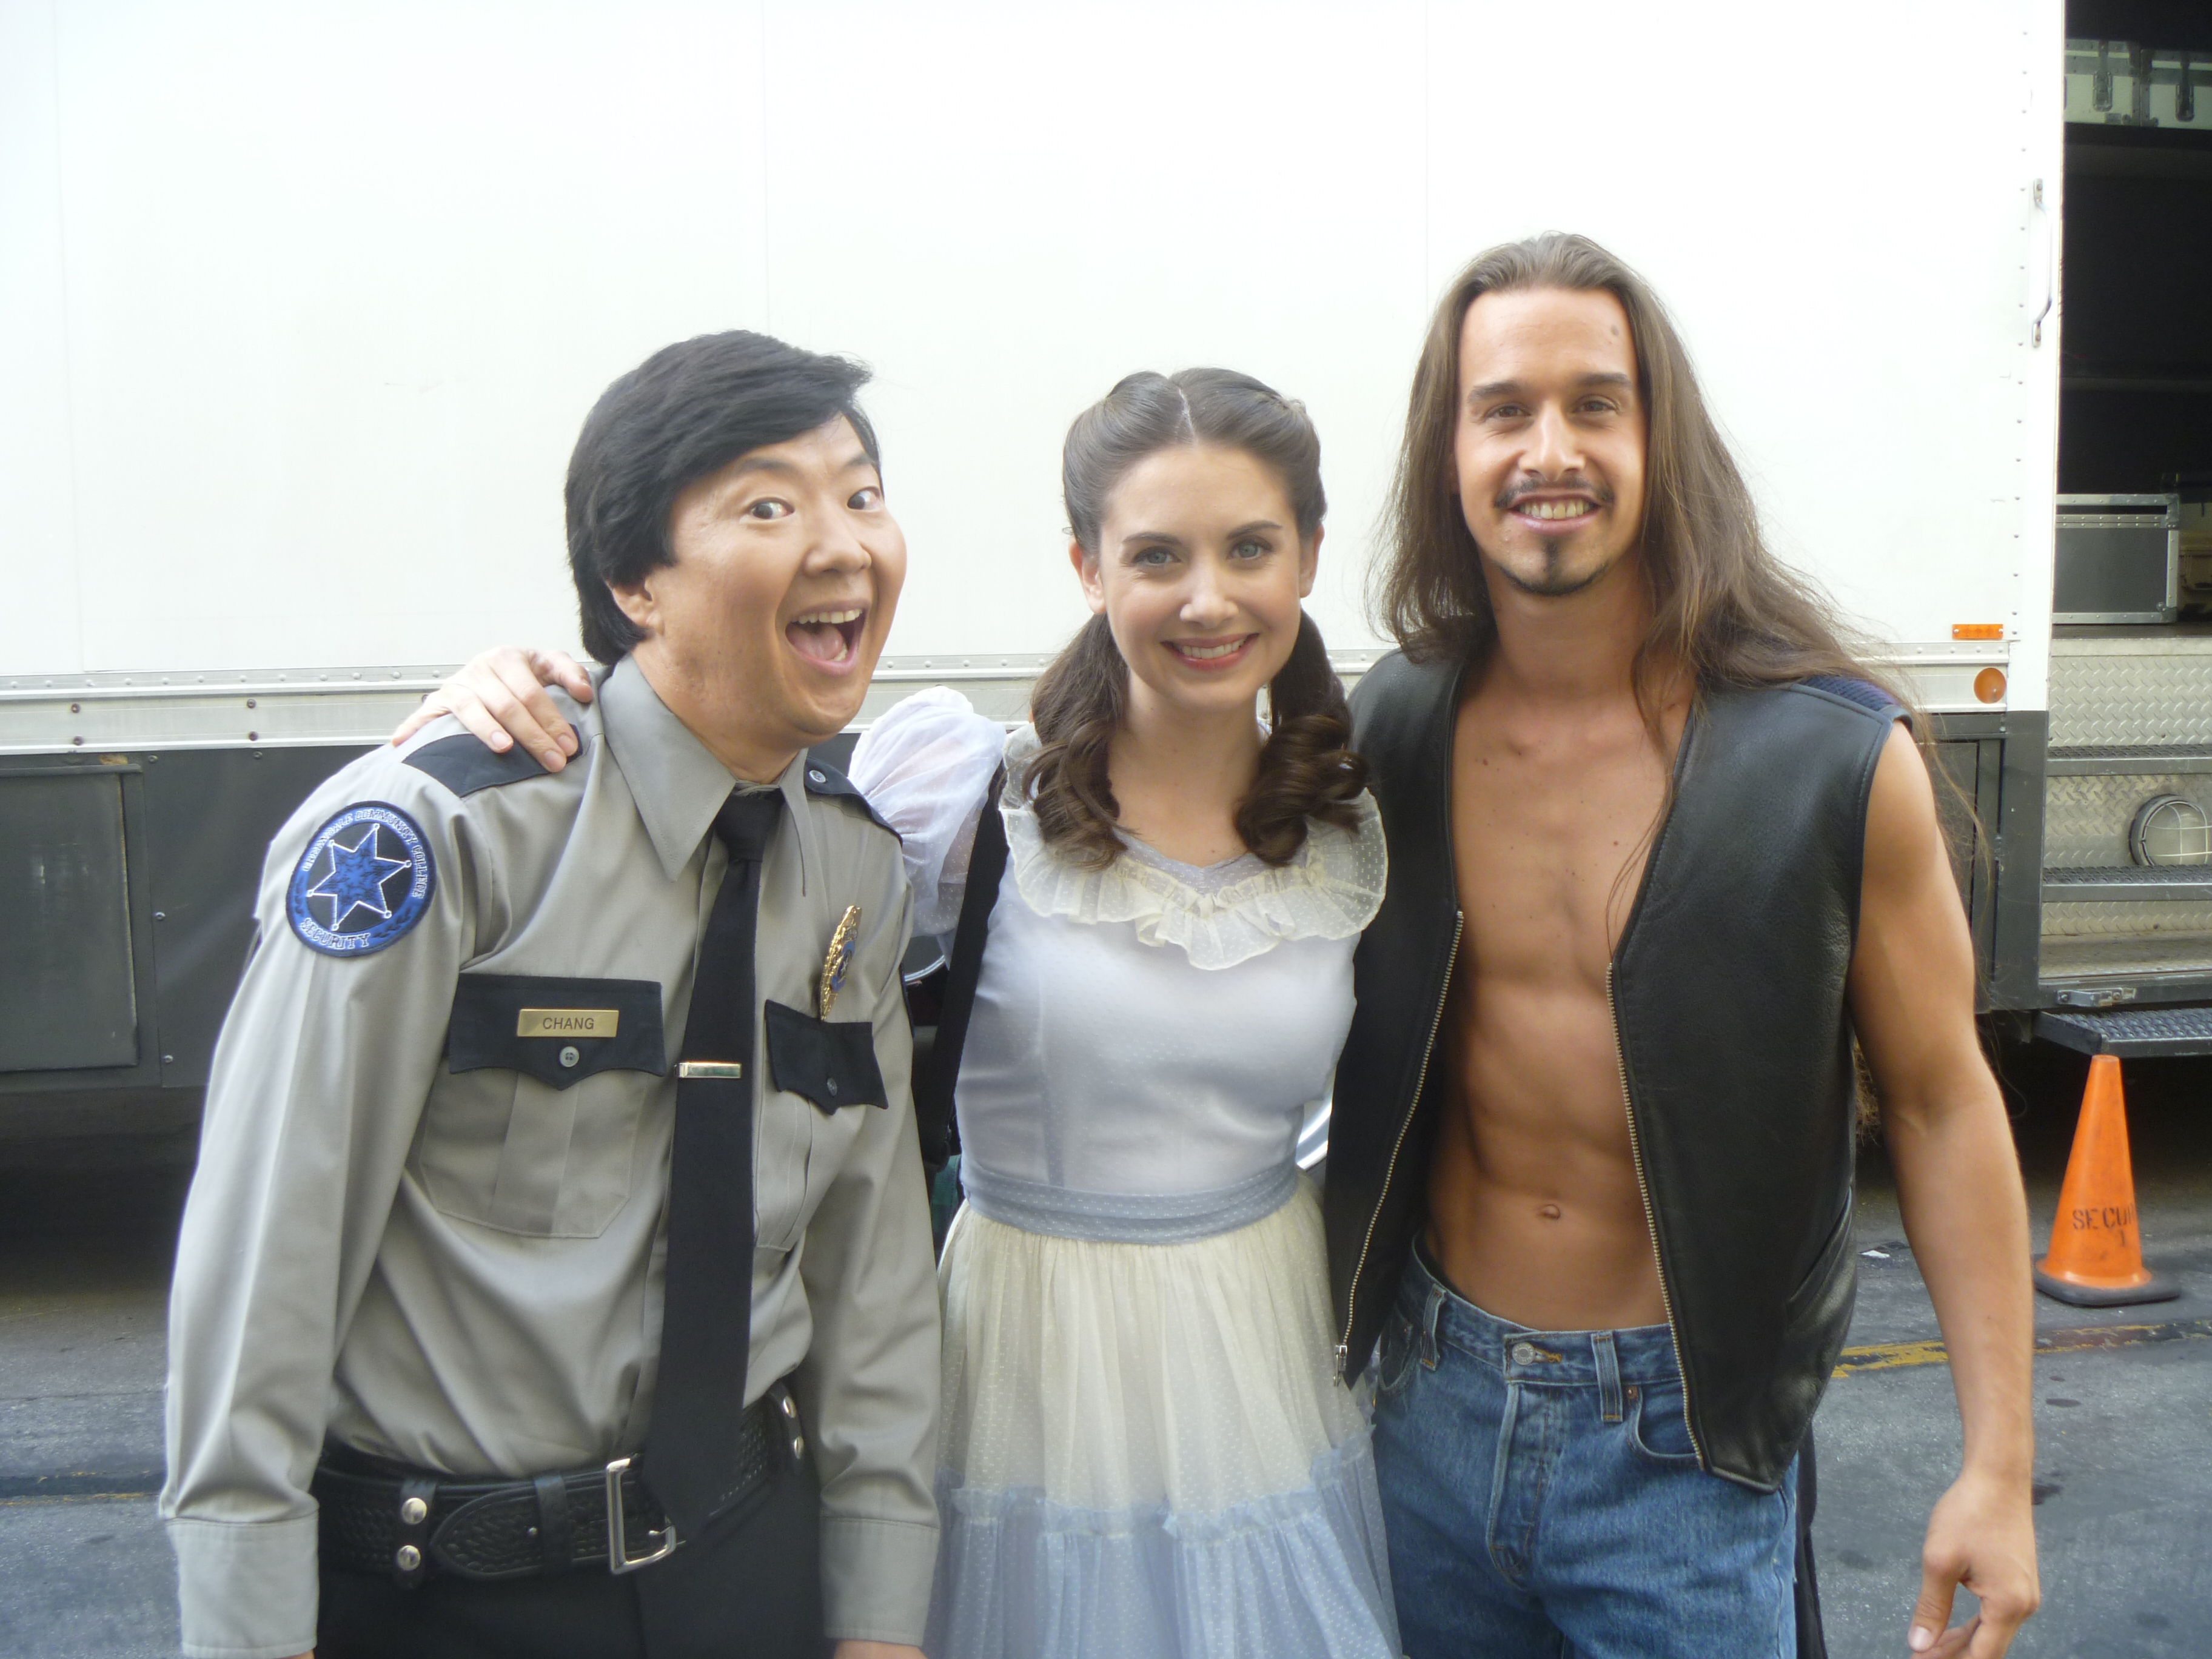 Ken Jeong, Alison Brie and Sancho Martin (Lorenzo Lamas Impersonator/Movement Actor Community 